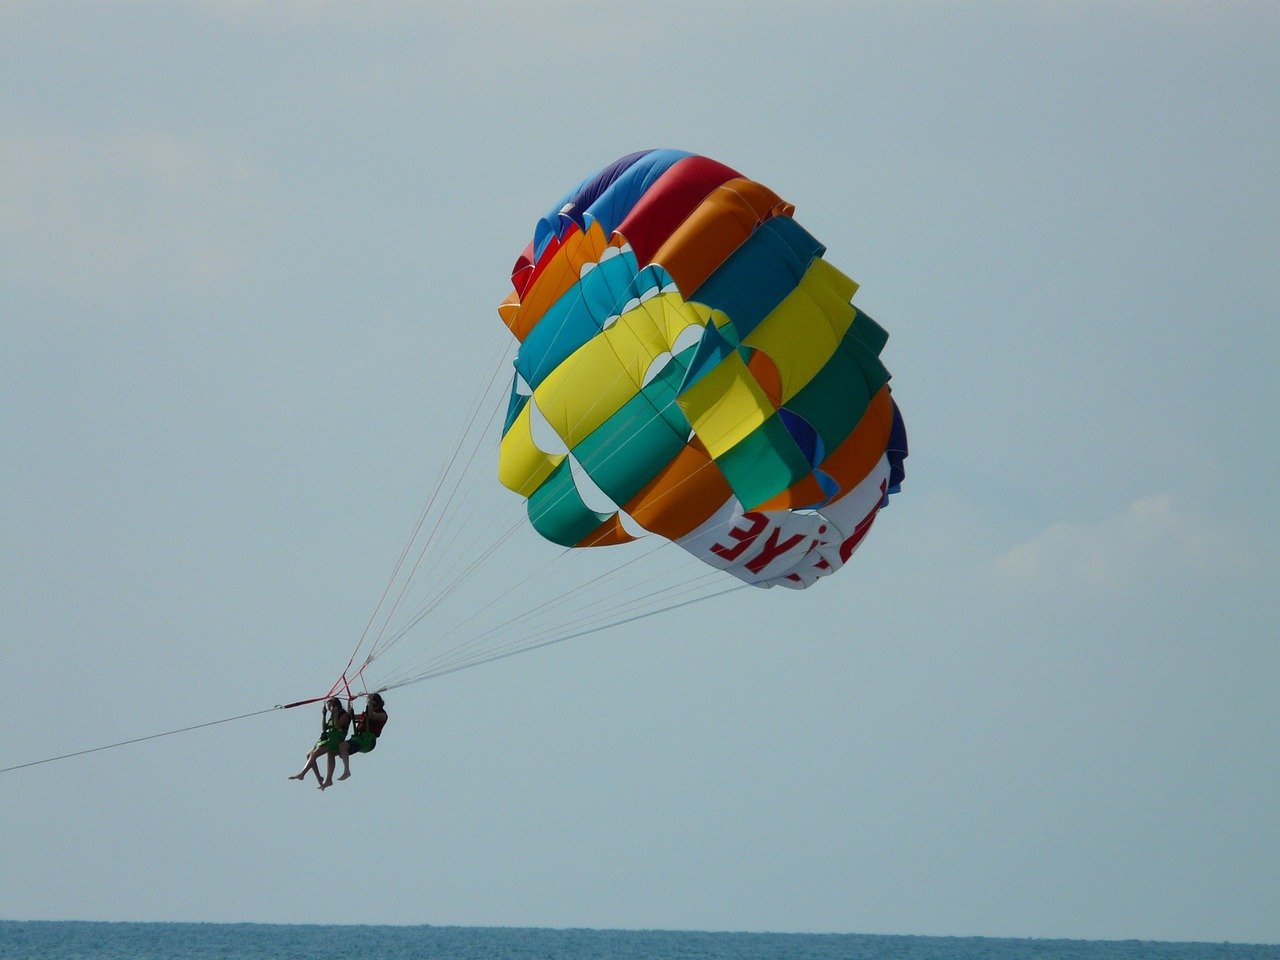 A couple sails on a rainbow parachute against pale blue sky